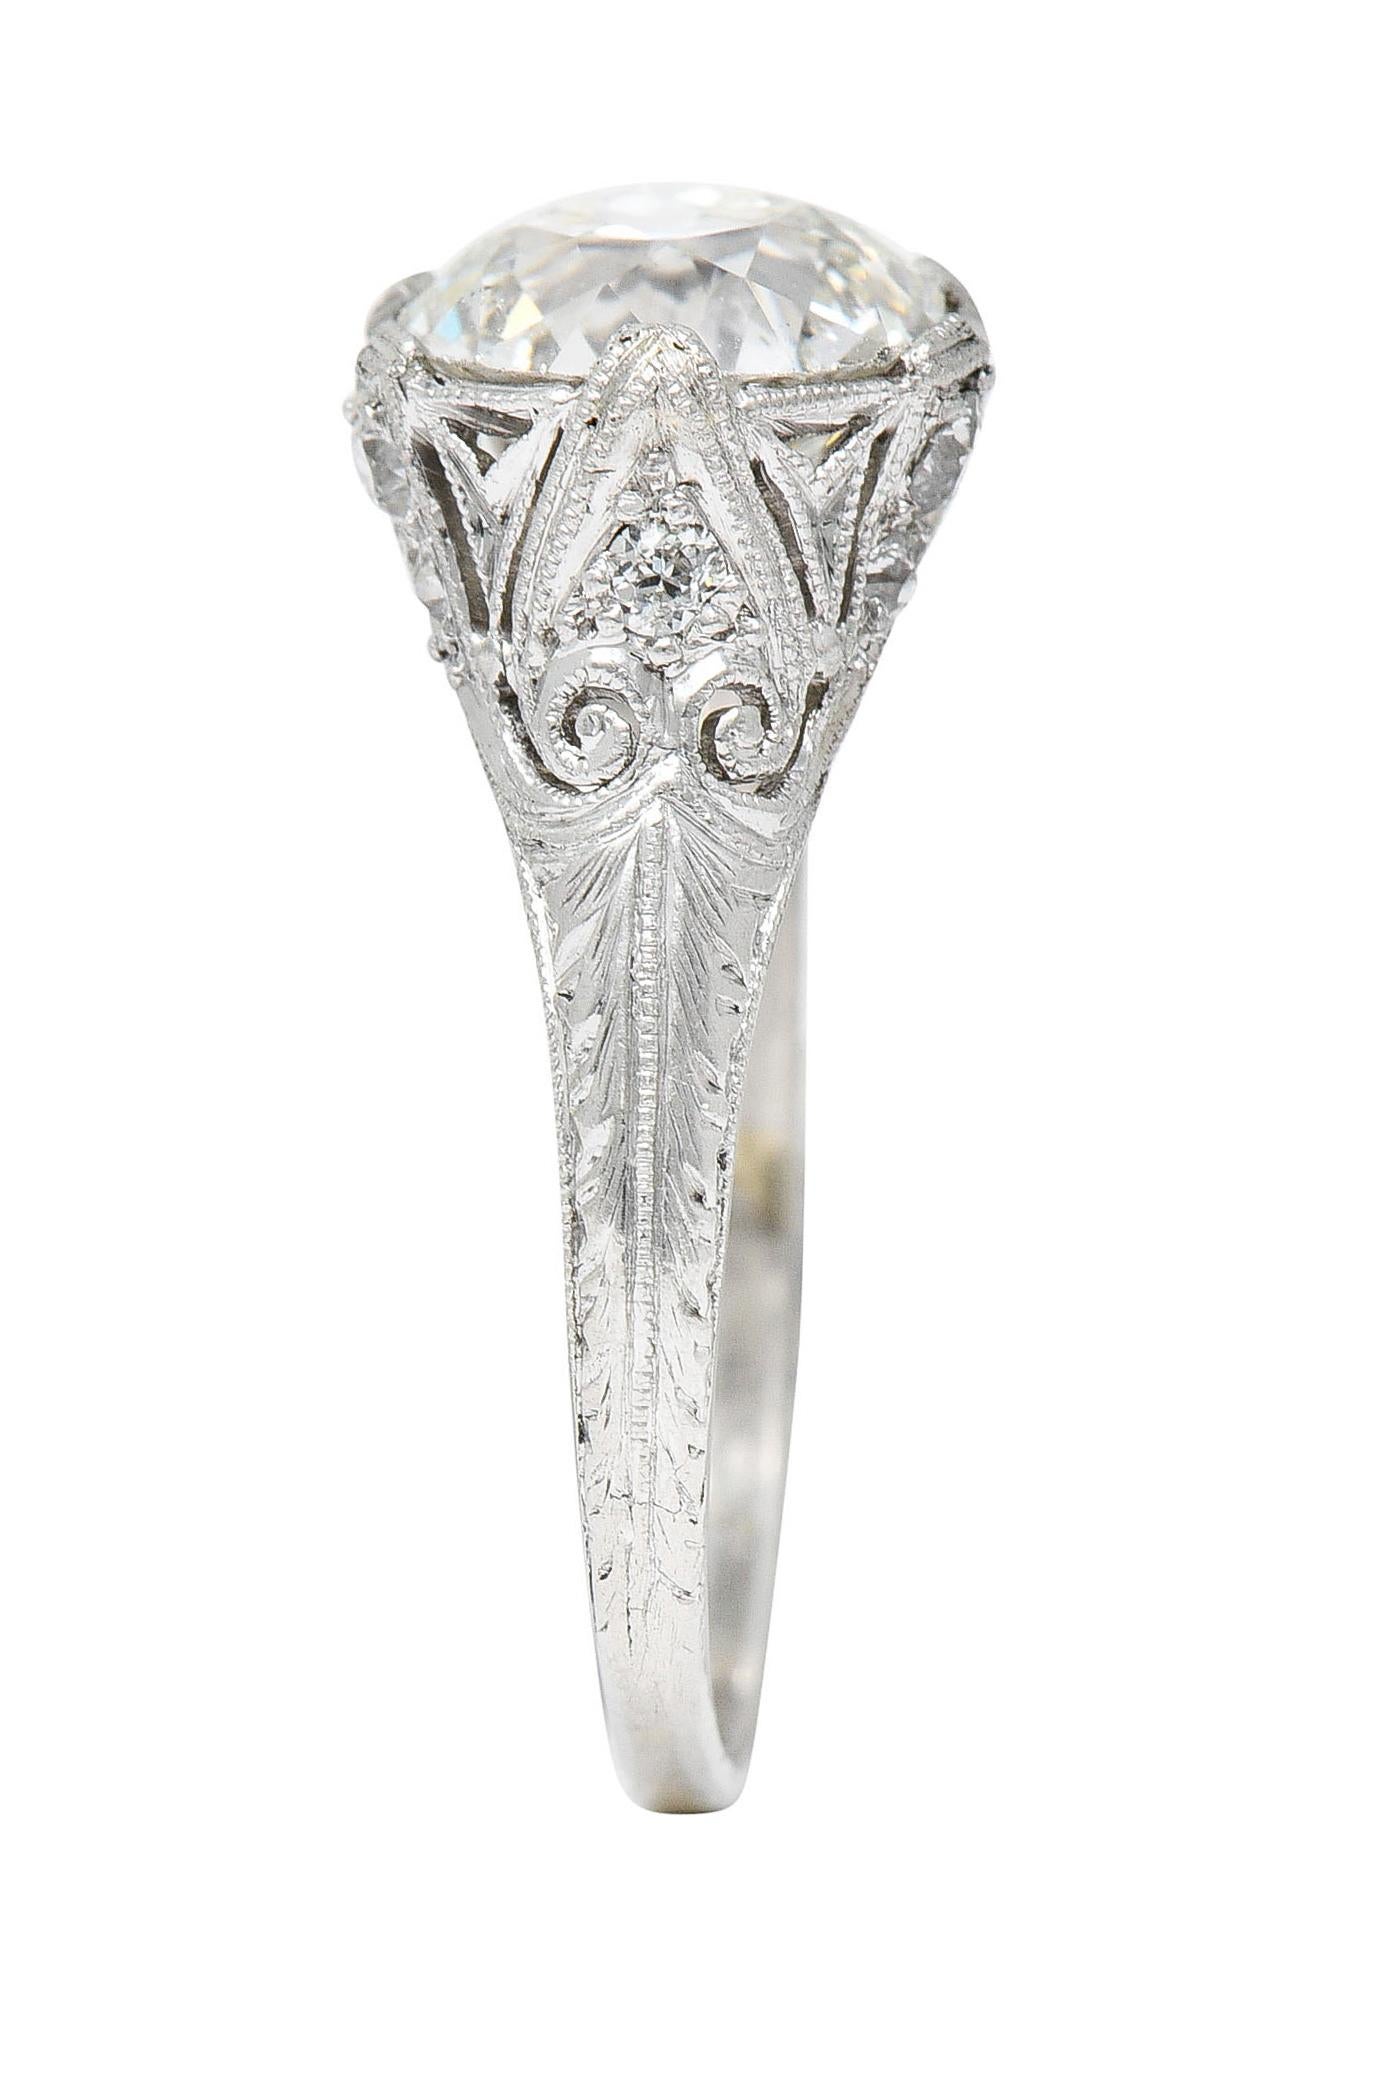 Antique Edwardian 2.25 Carats Diamond Platinum Scrolled Engagement Ring 1